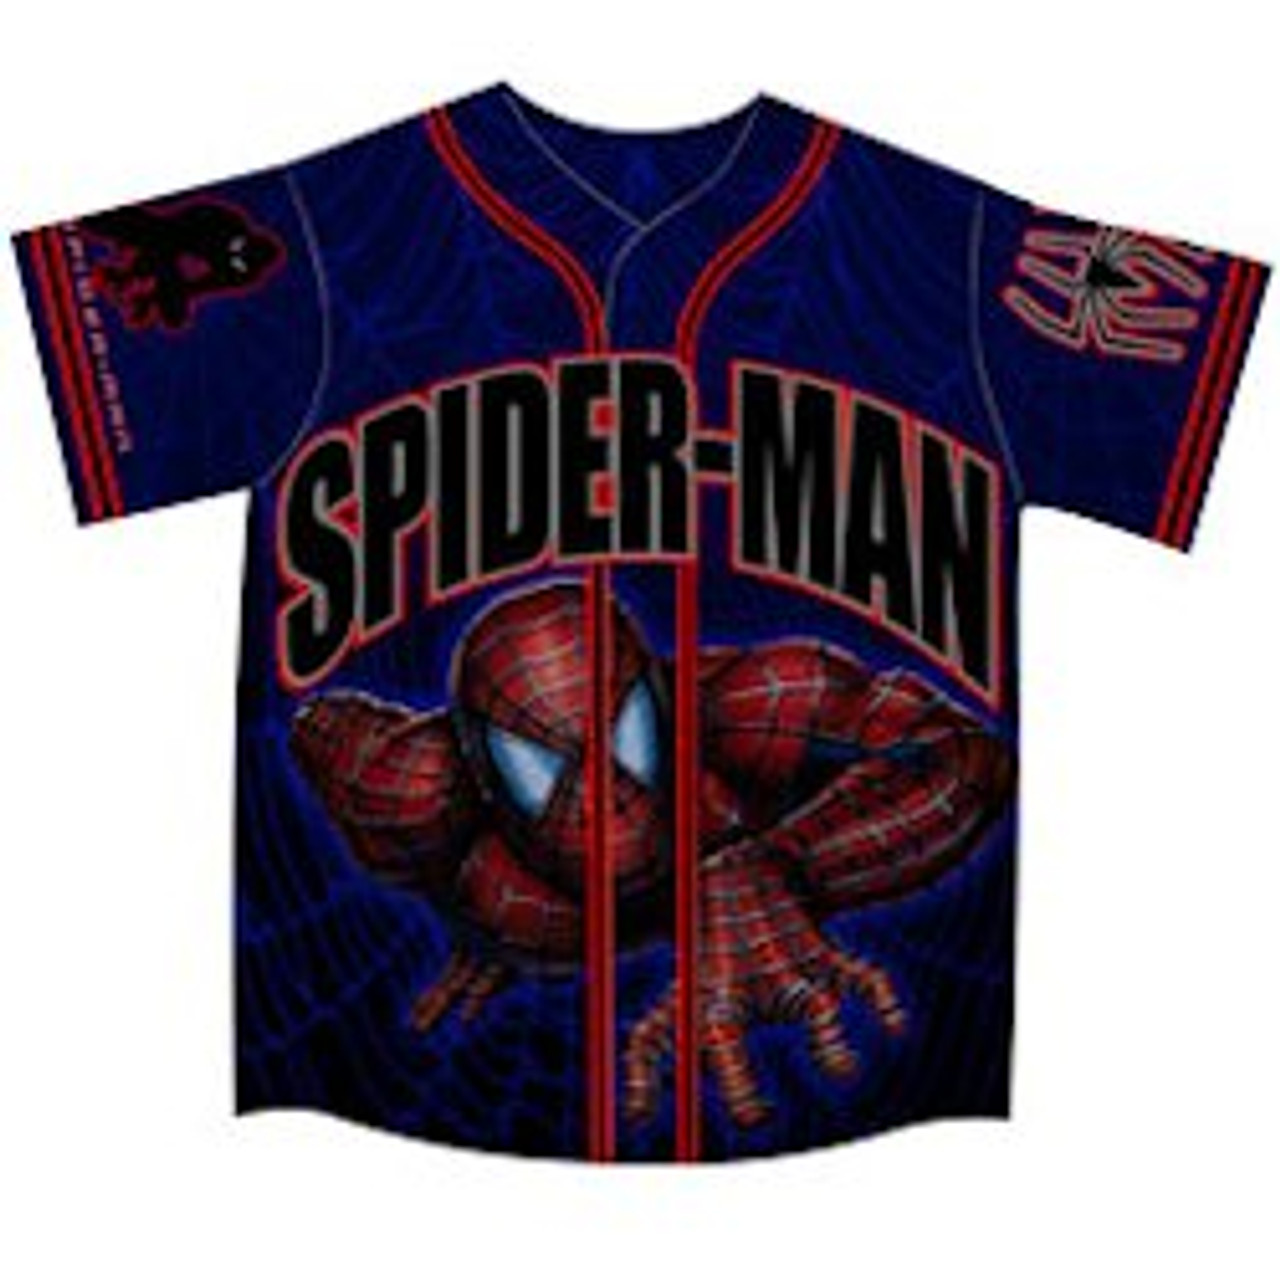 Custom Spider Man Baseball Jersey - Jomagift